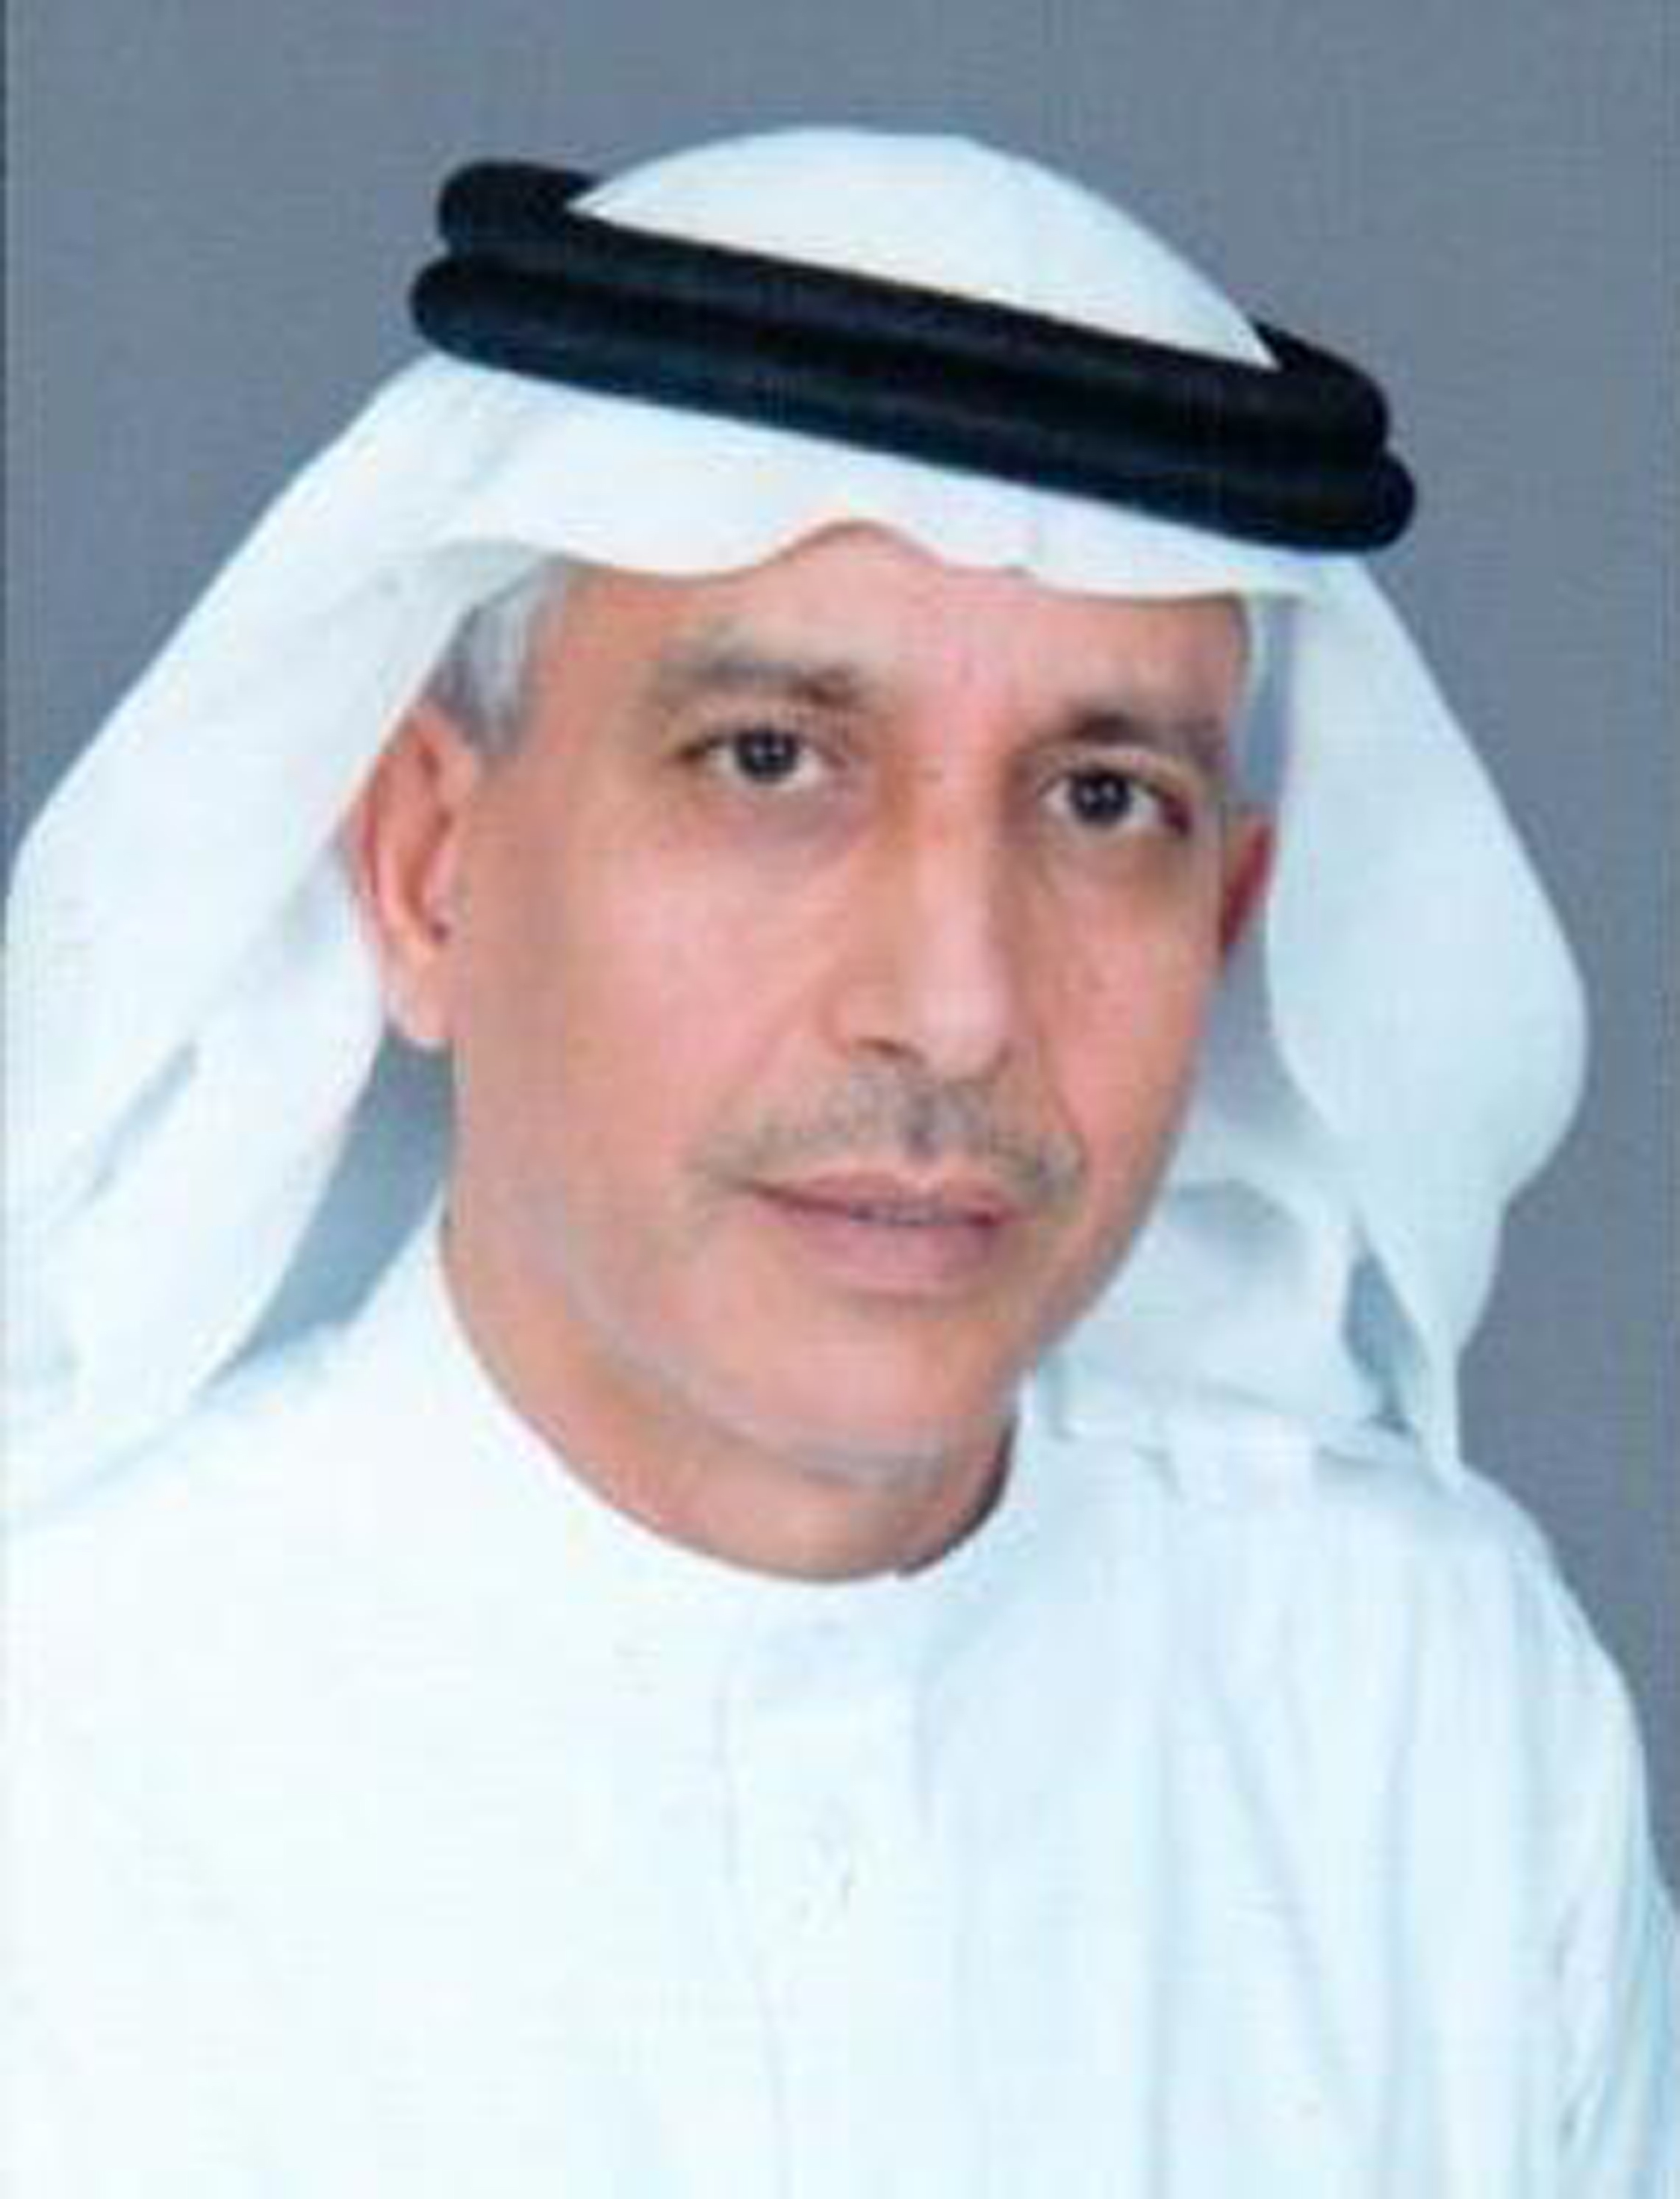 Ali Abdulrahman Al Gwaiz